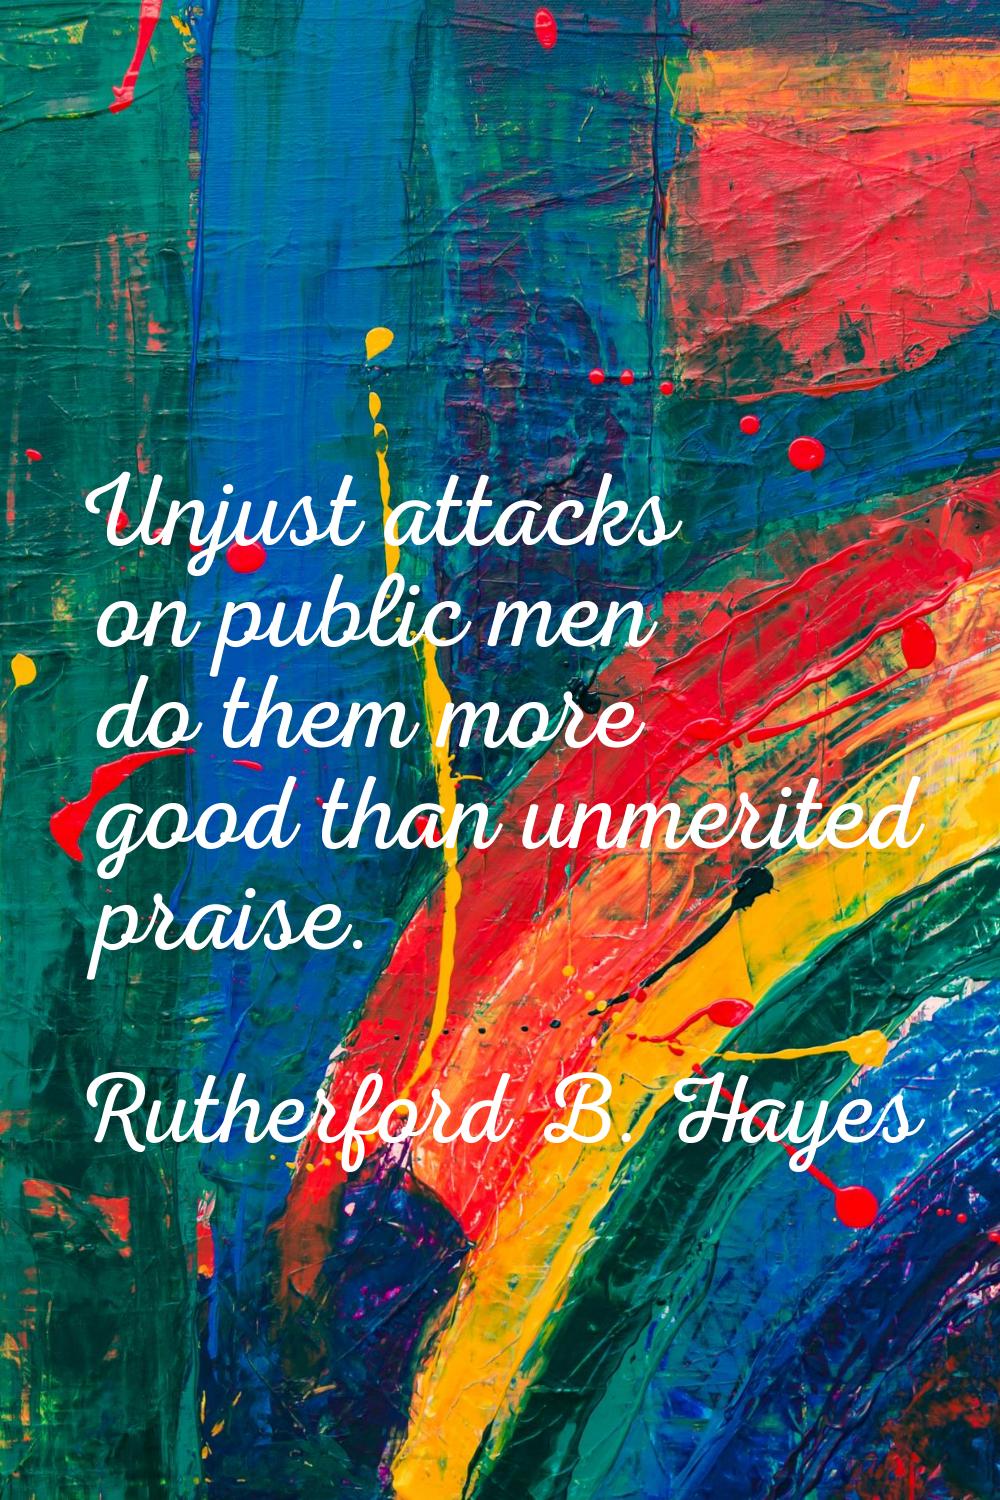 Unjust attacks on public men do them more good than unmerited praise.